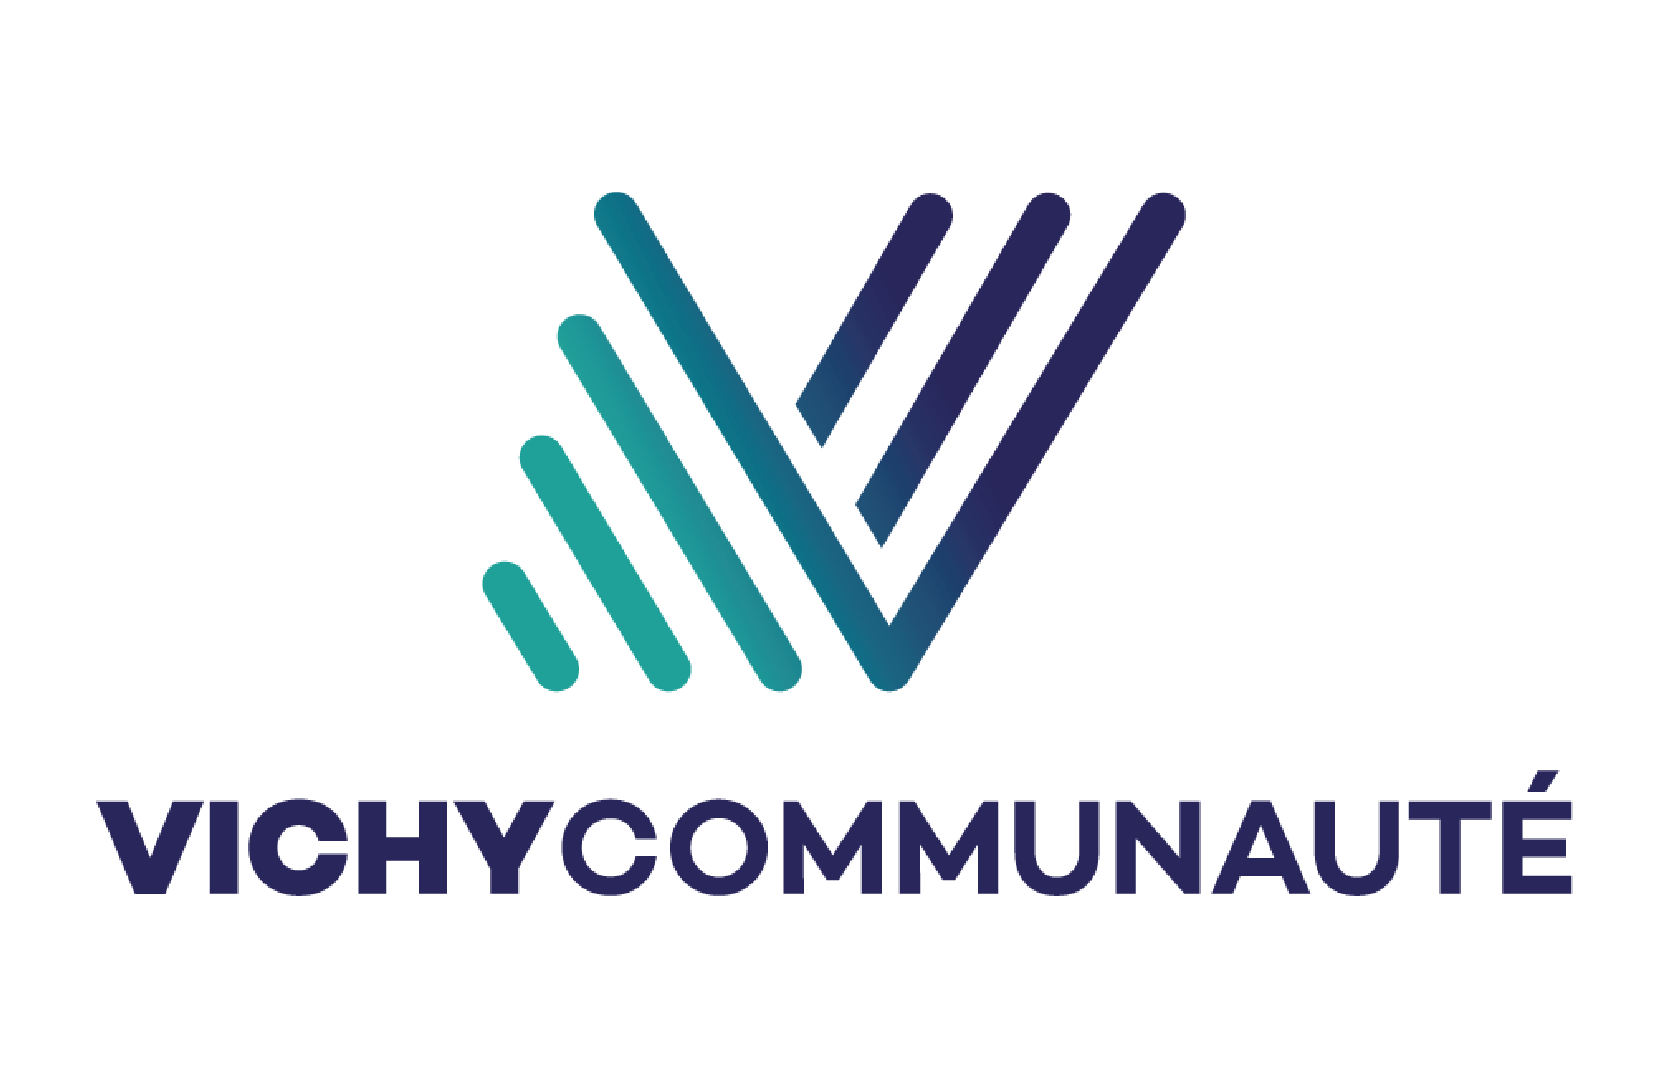 Vichy communauté logo